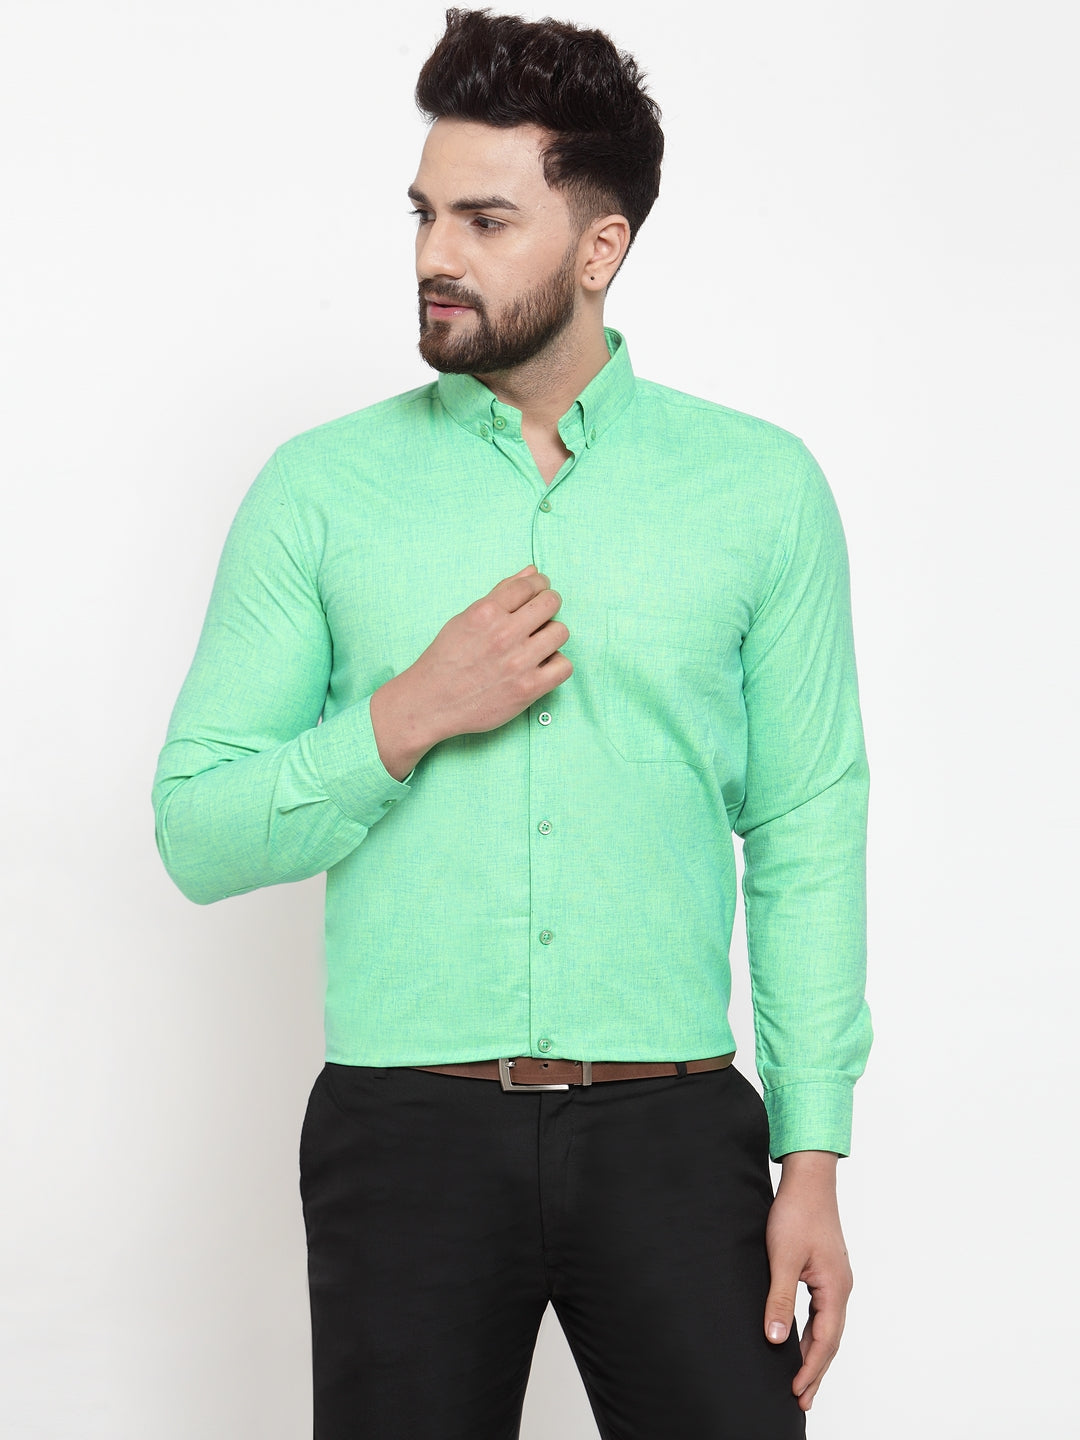 Men's Green Cotton Solid Button Down Formal Shirts ( SF 753Green ) - Jainish